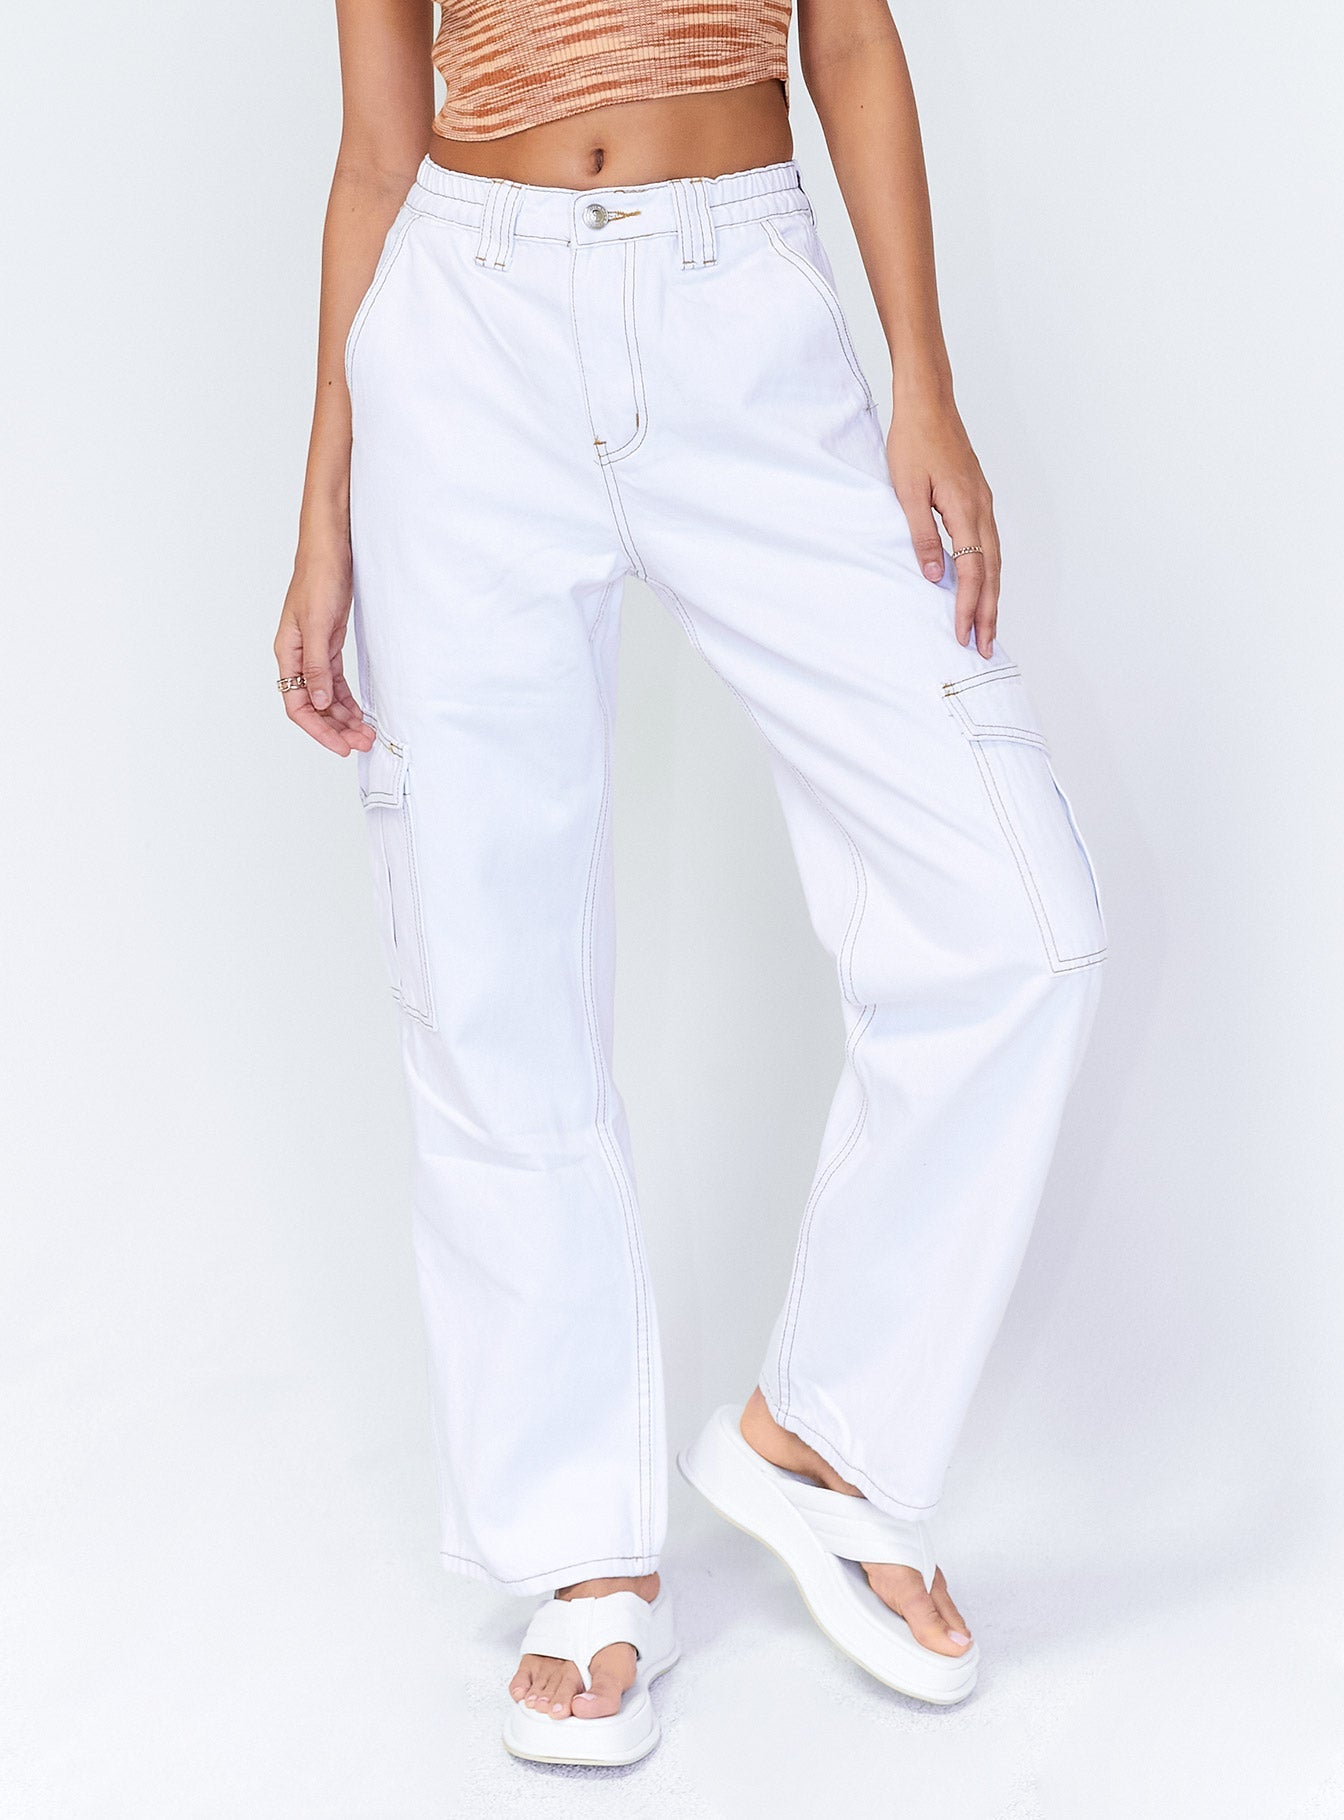 Women's White Denim Jeans High Rise Wide Leg | Ally Fashion